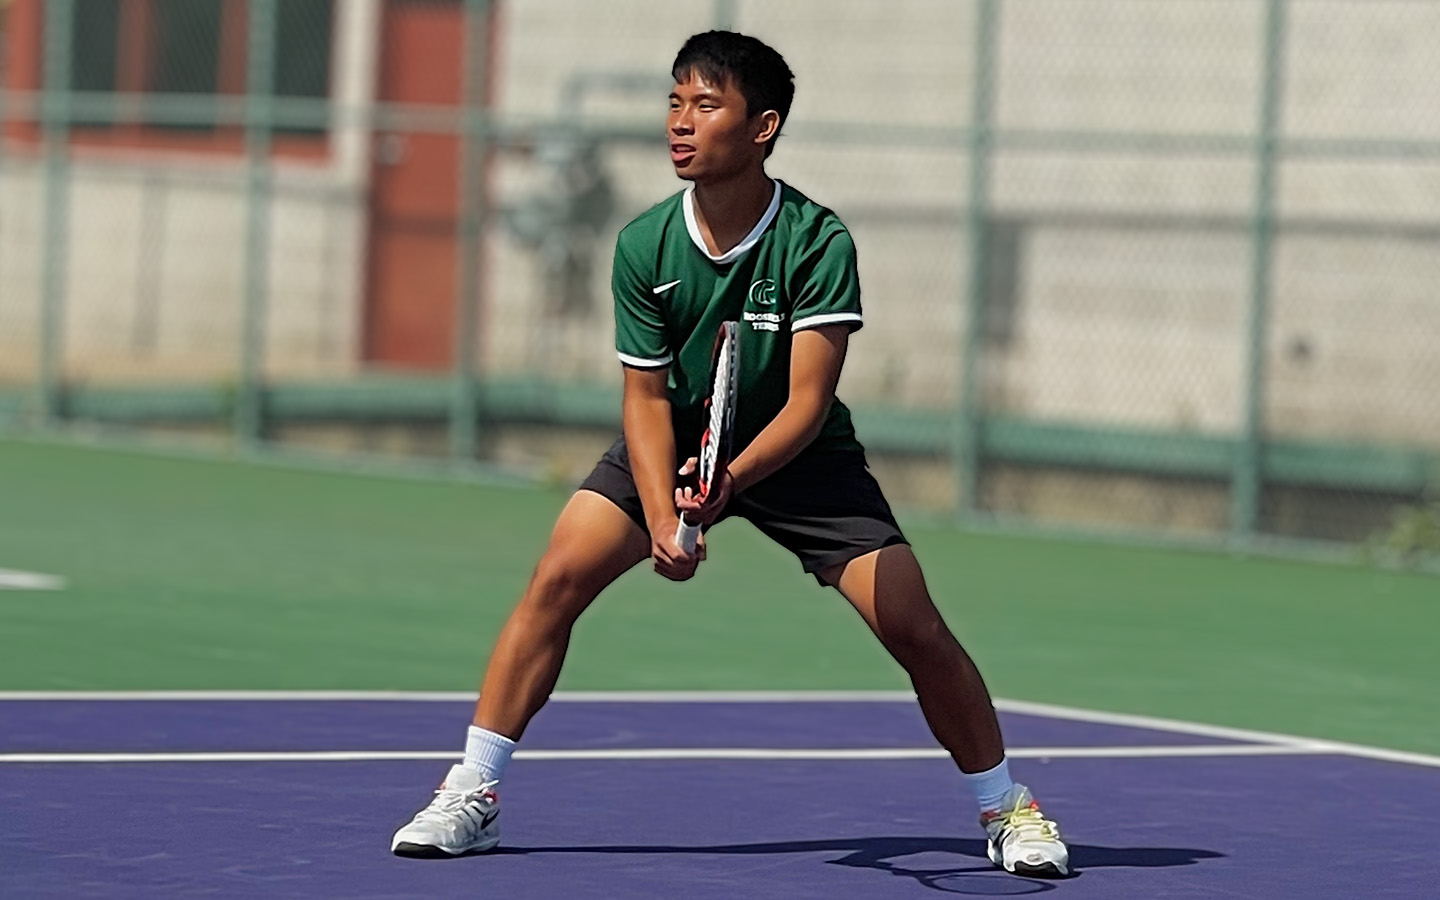 Roosevelt tennis player Kerwin Chong